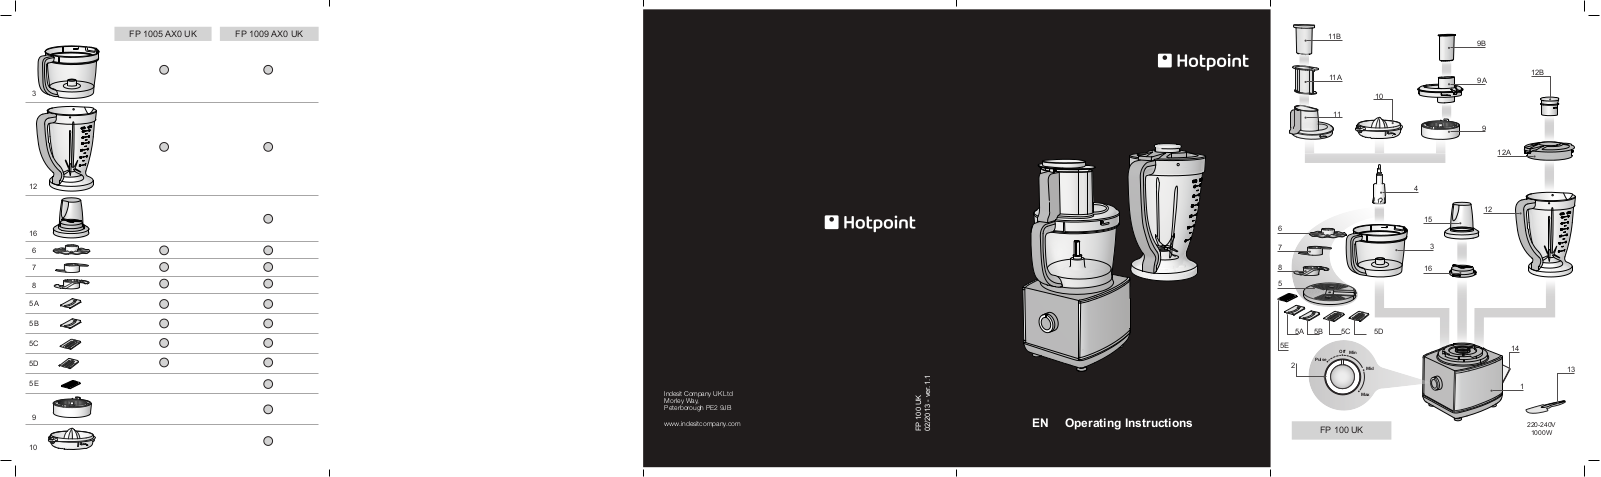 Hotpoint FP 100 UK Instruction booklet